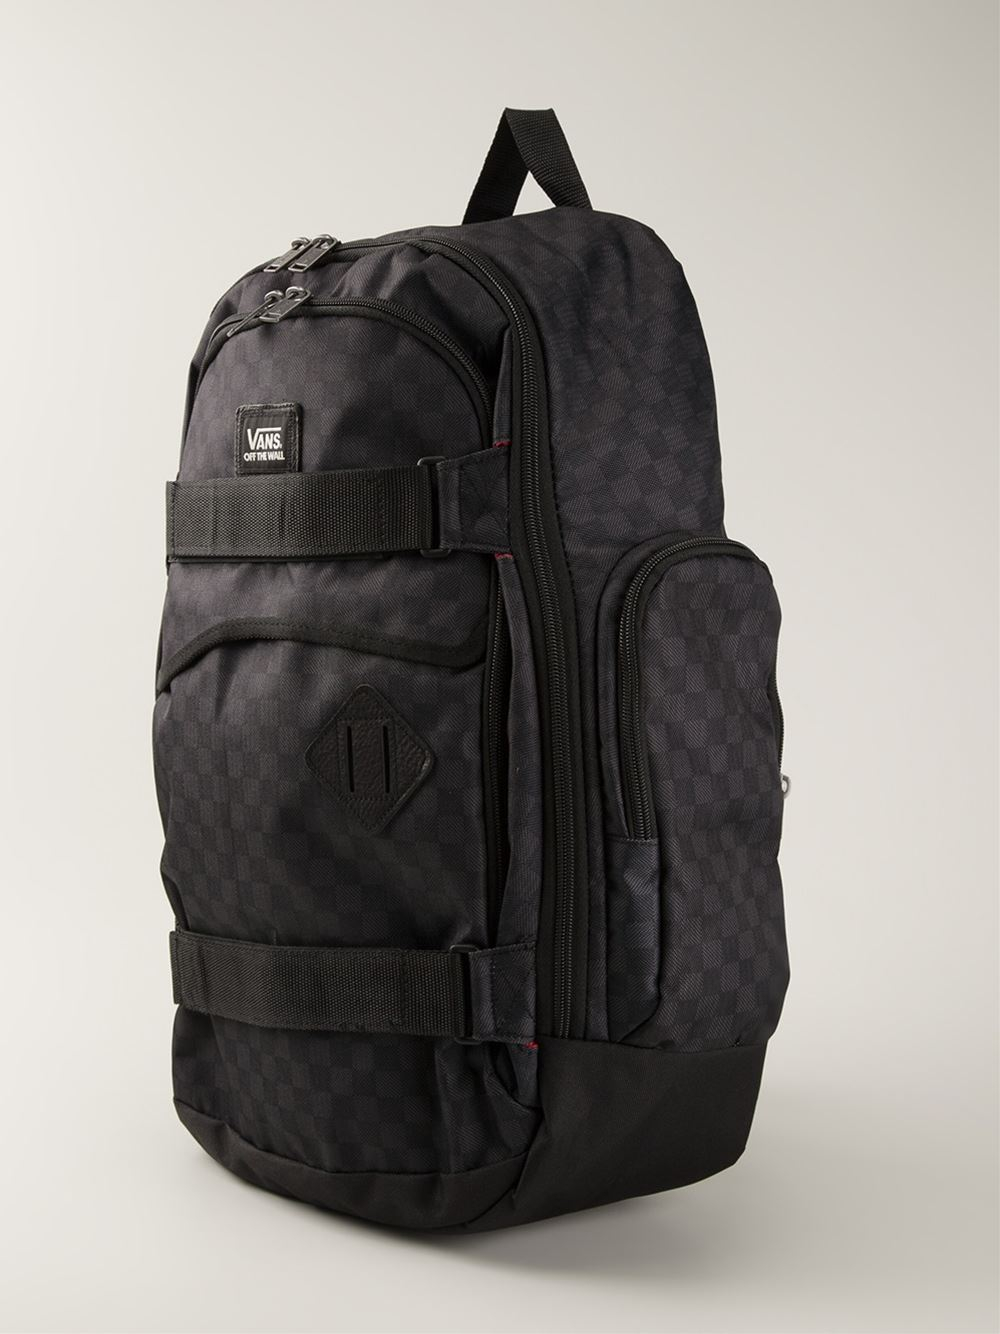 Checkered Backpack in Black for Men - Lyst